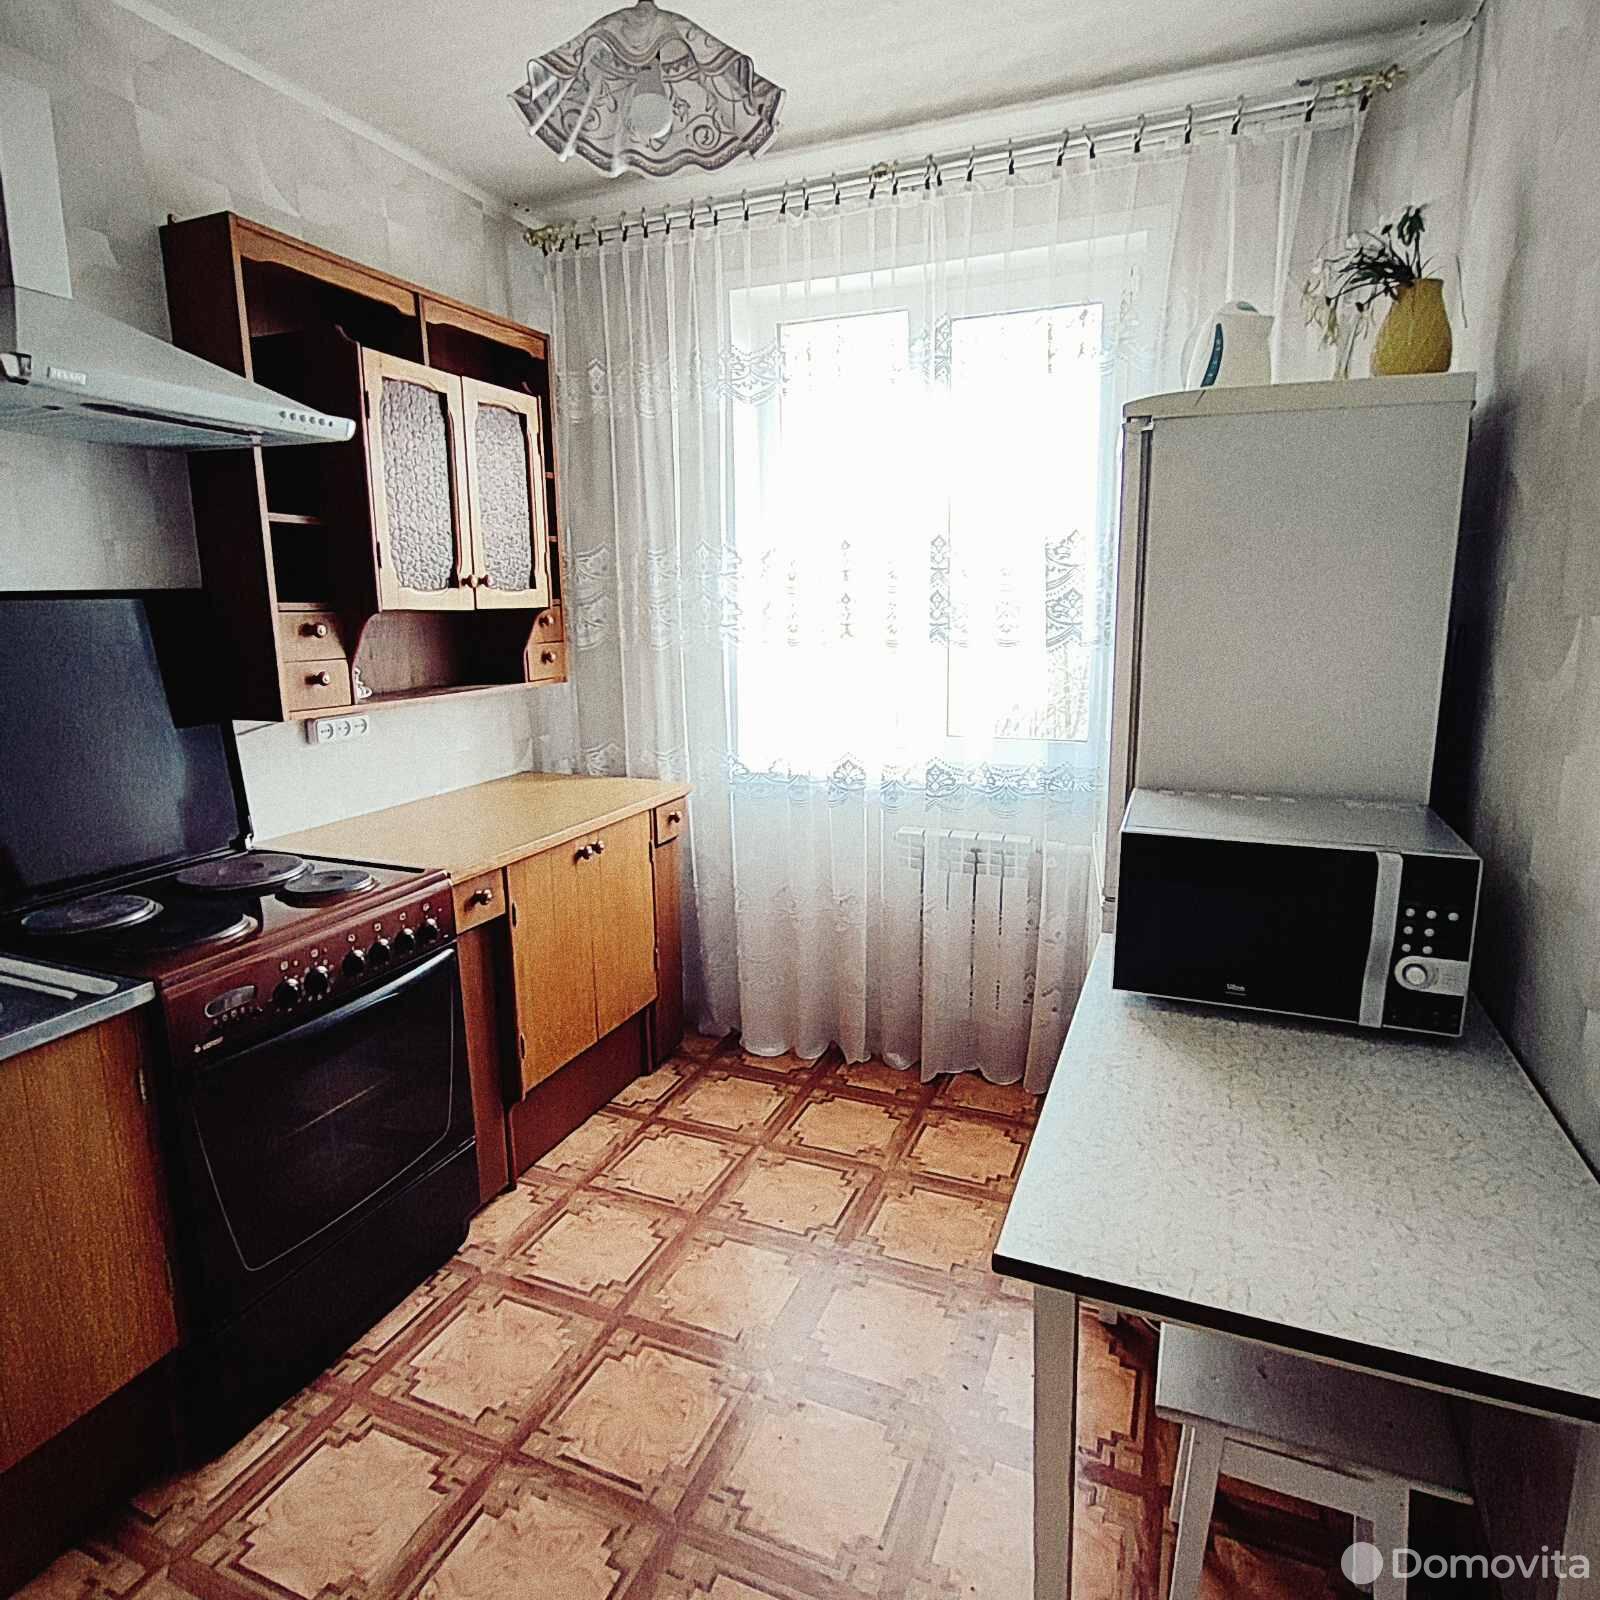 квартира, Минск, ул. Белецкого, д. 2, стоимость аренды 804 р./мес.